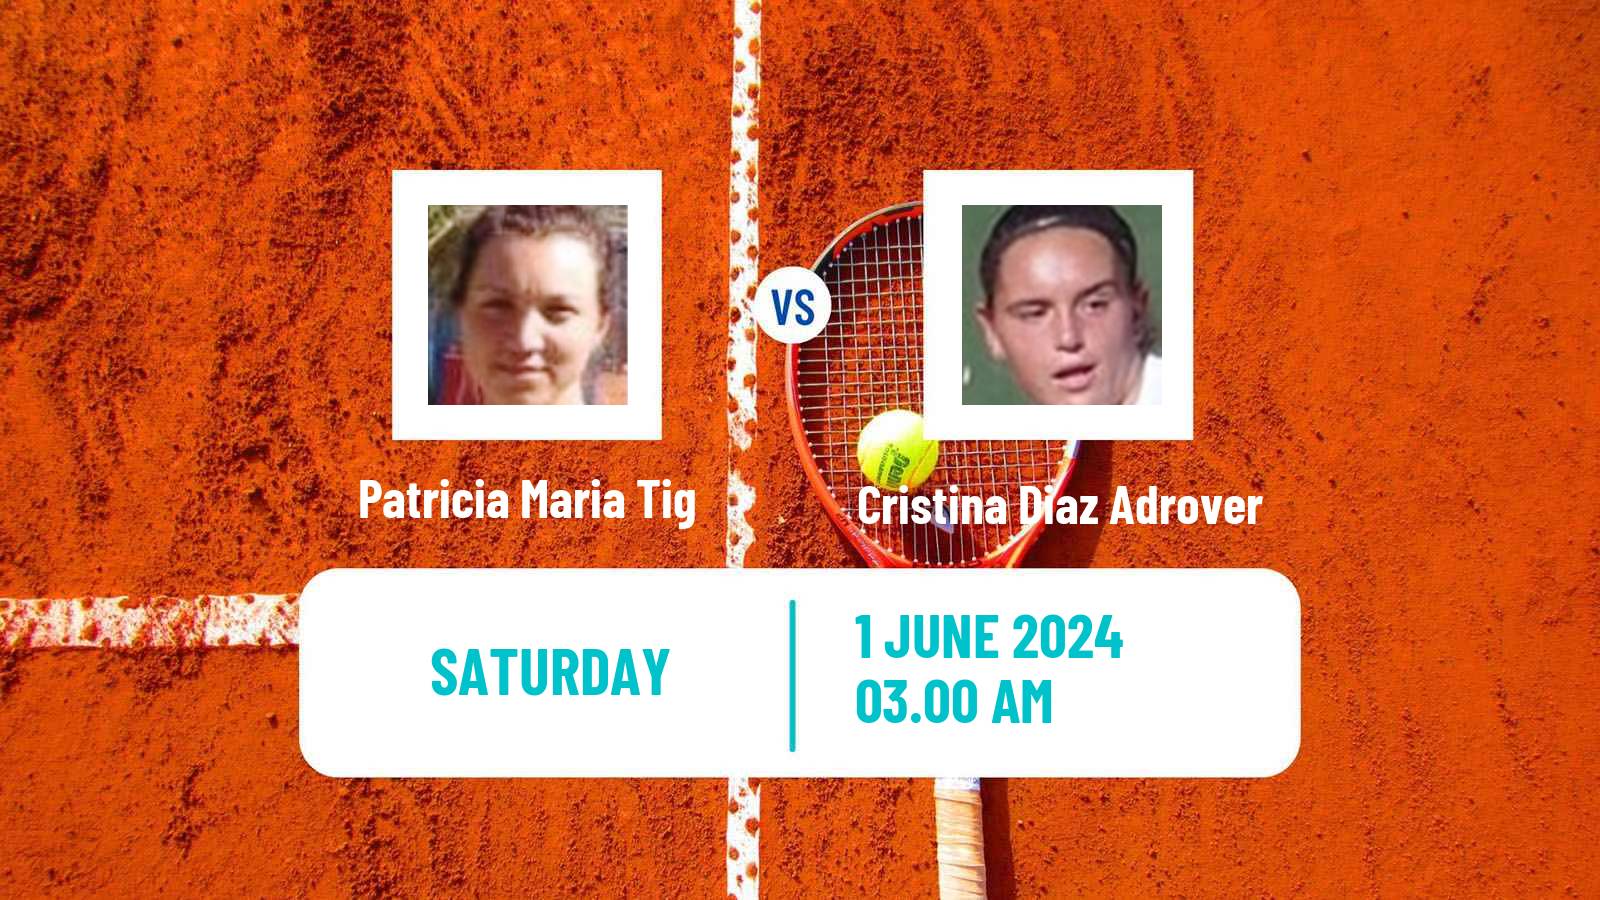 Tennis ITF W15 Galati Women Patricia Maria Tig - Cristina Diaz Adrover